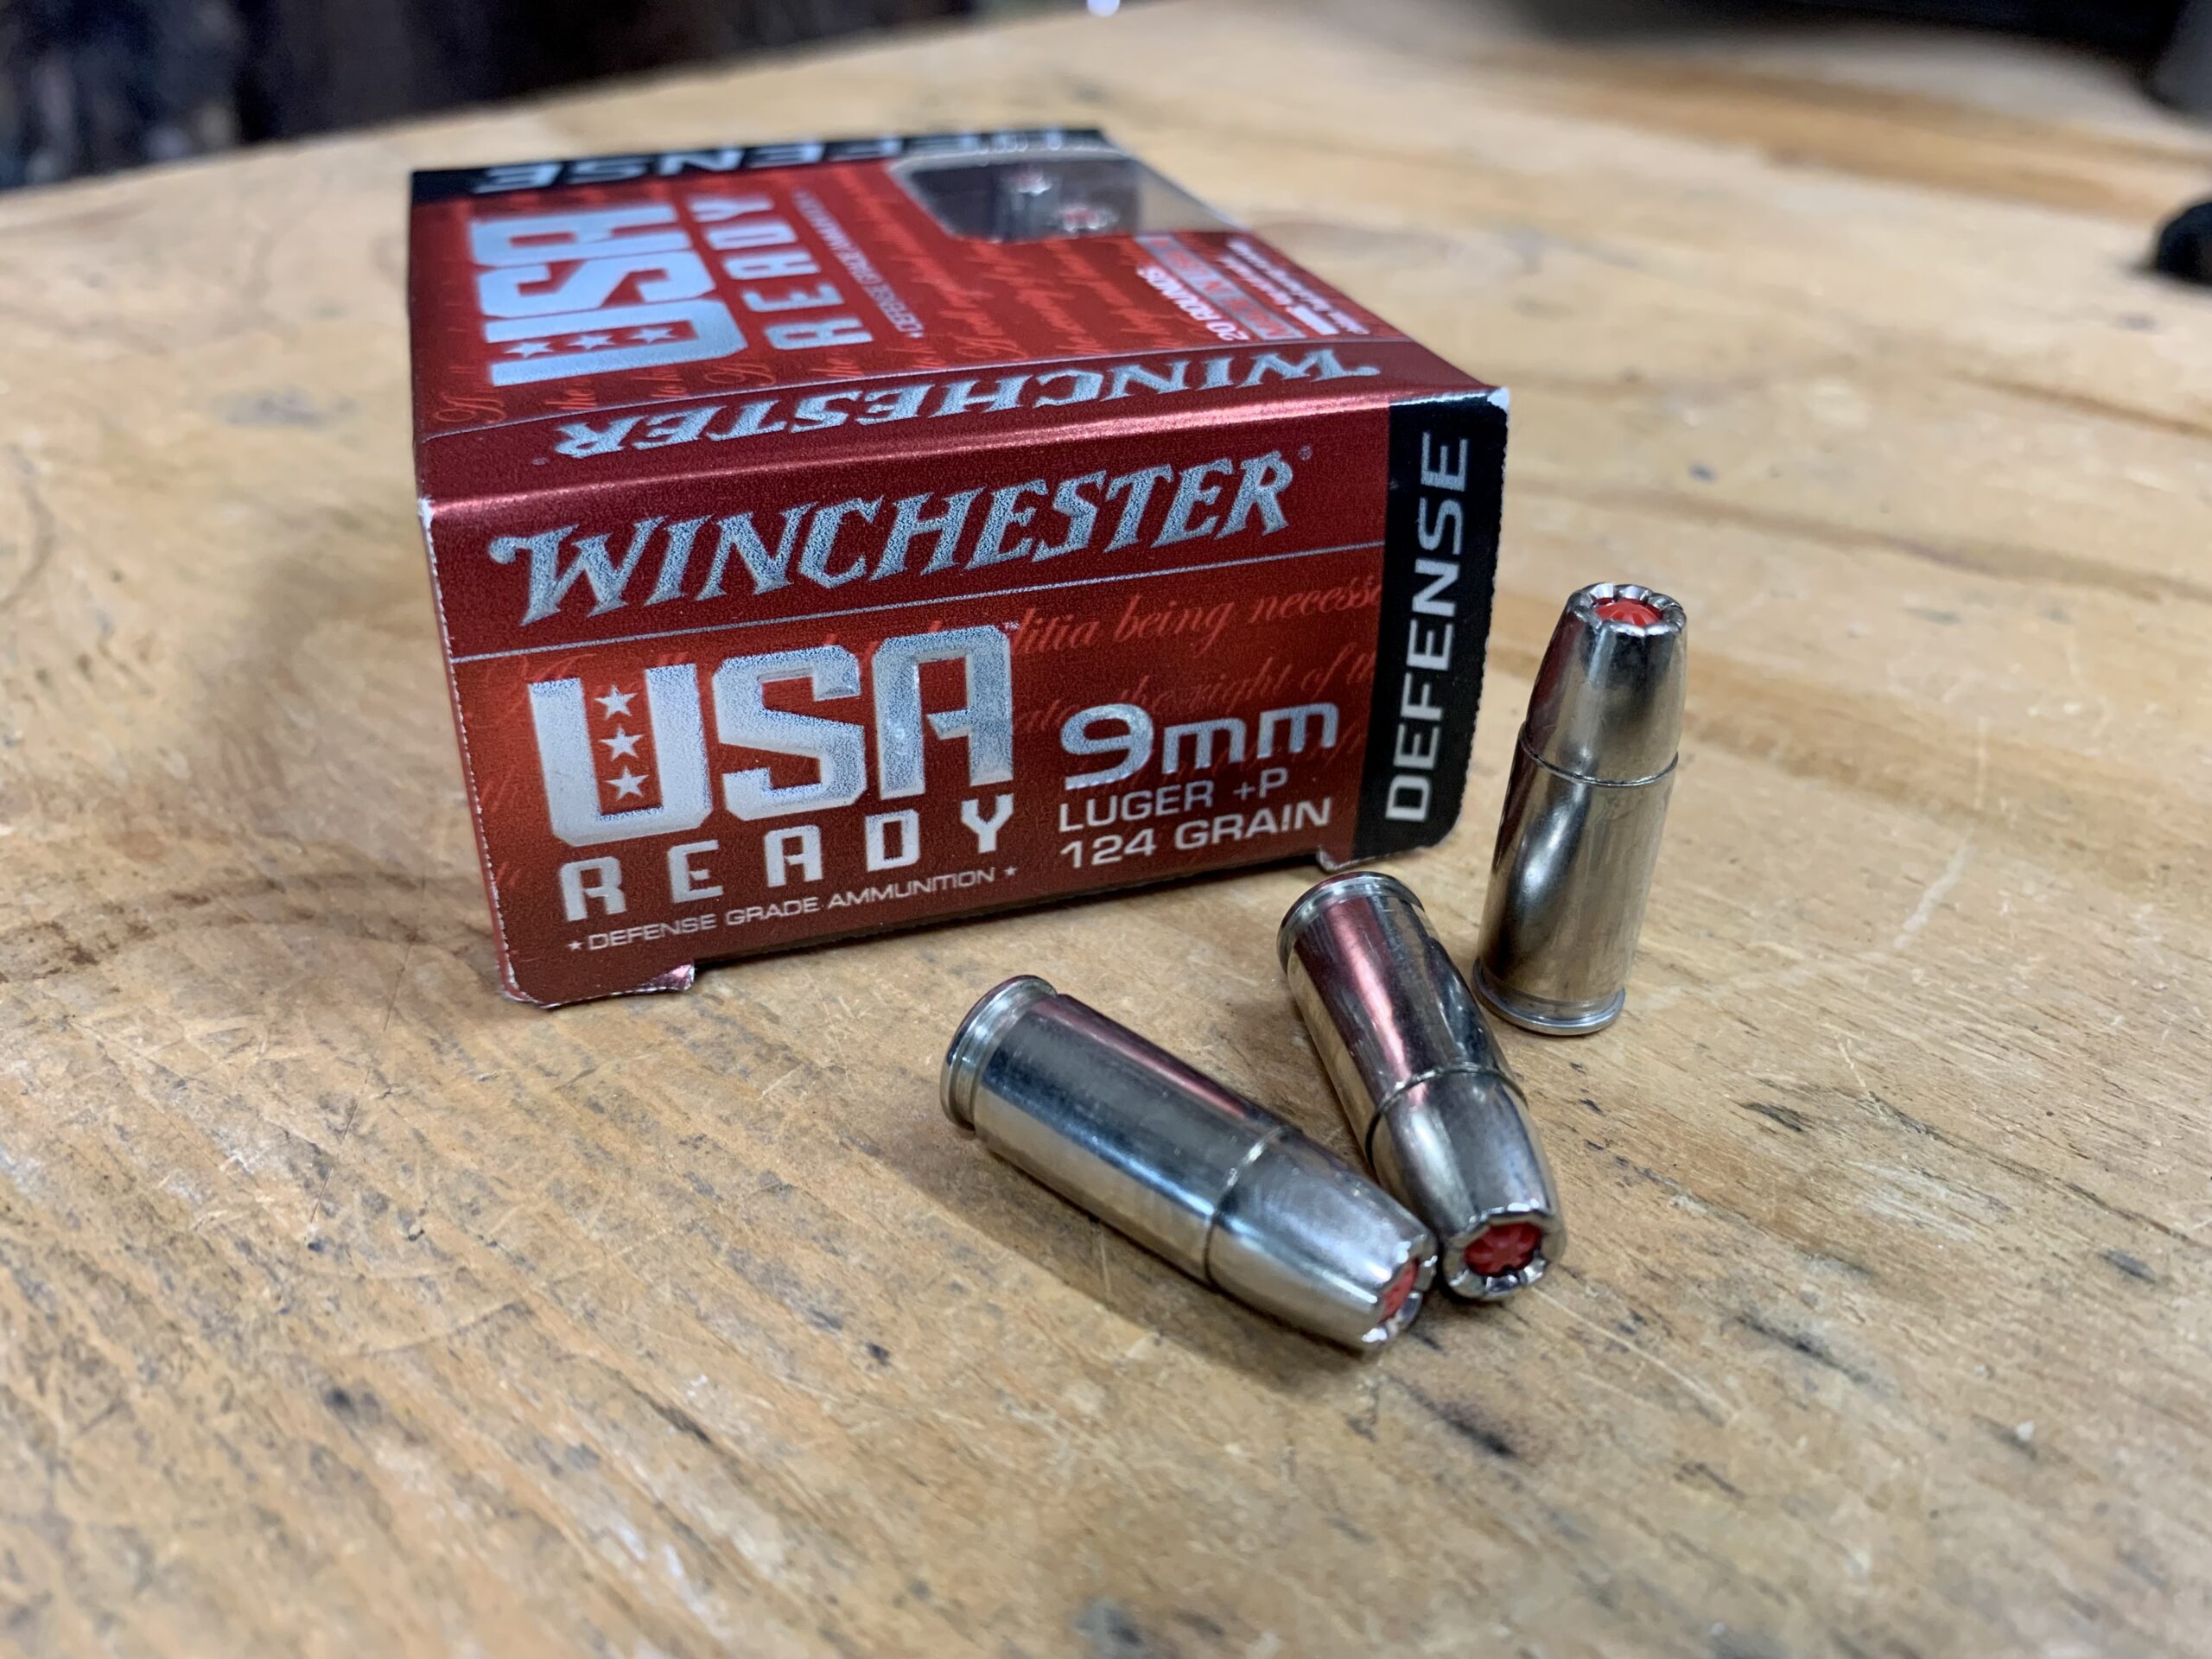 Winchester USA Ready Defense 9mm